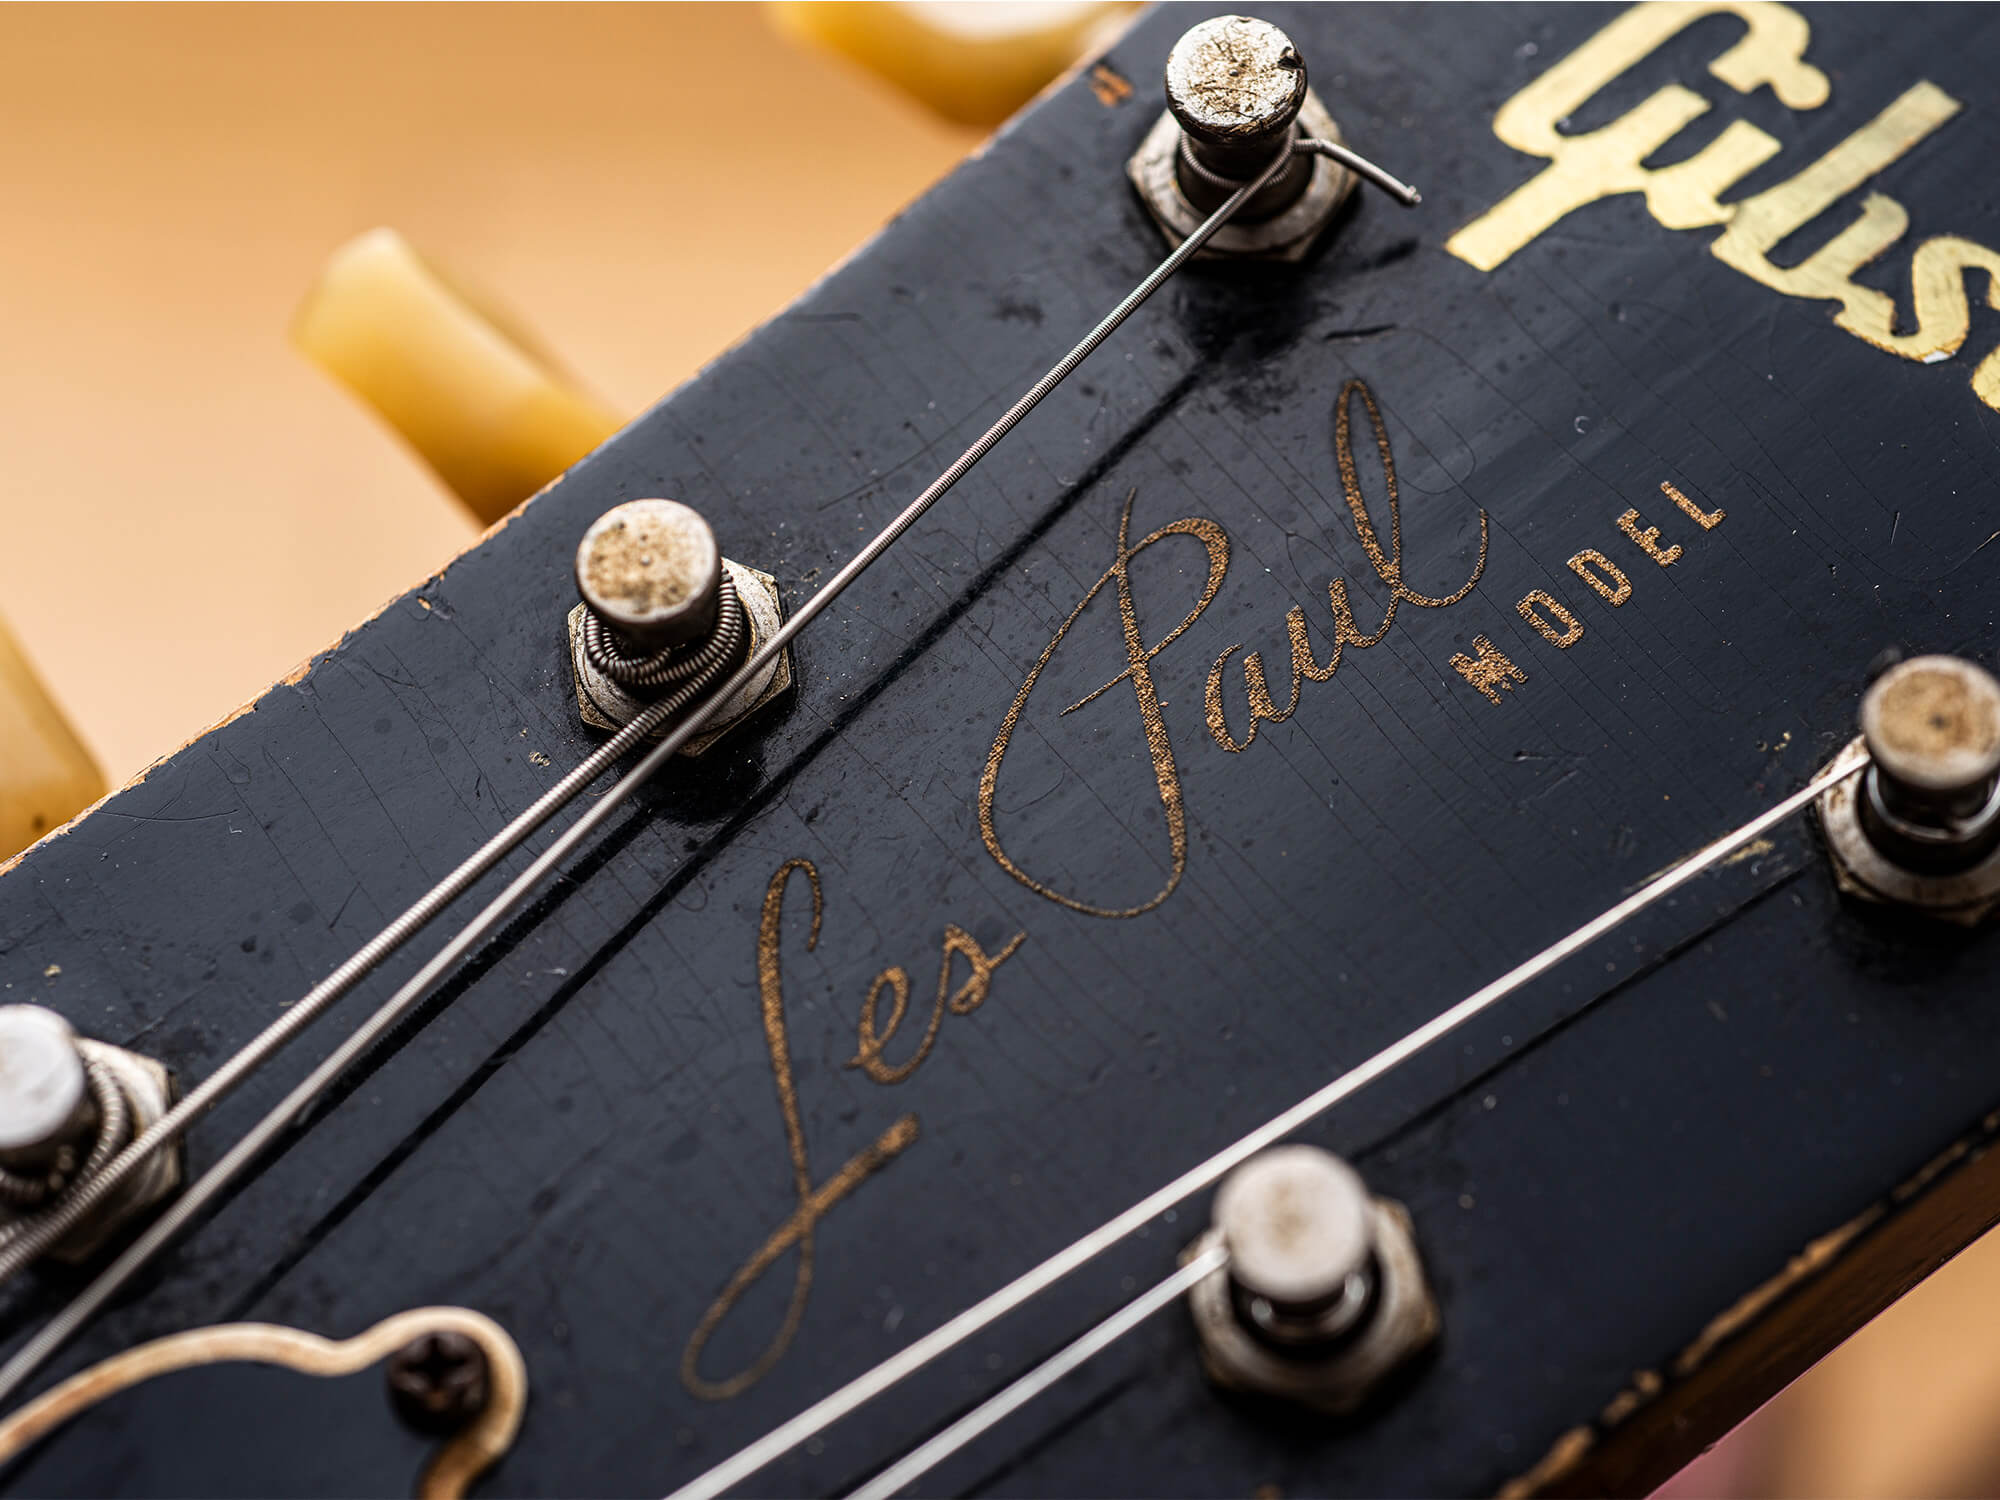 Les Paul's Number One Guitar